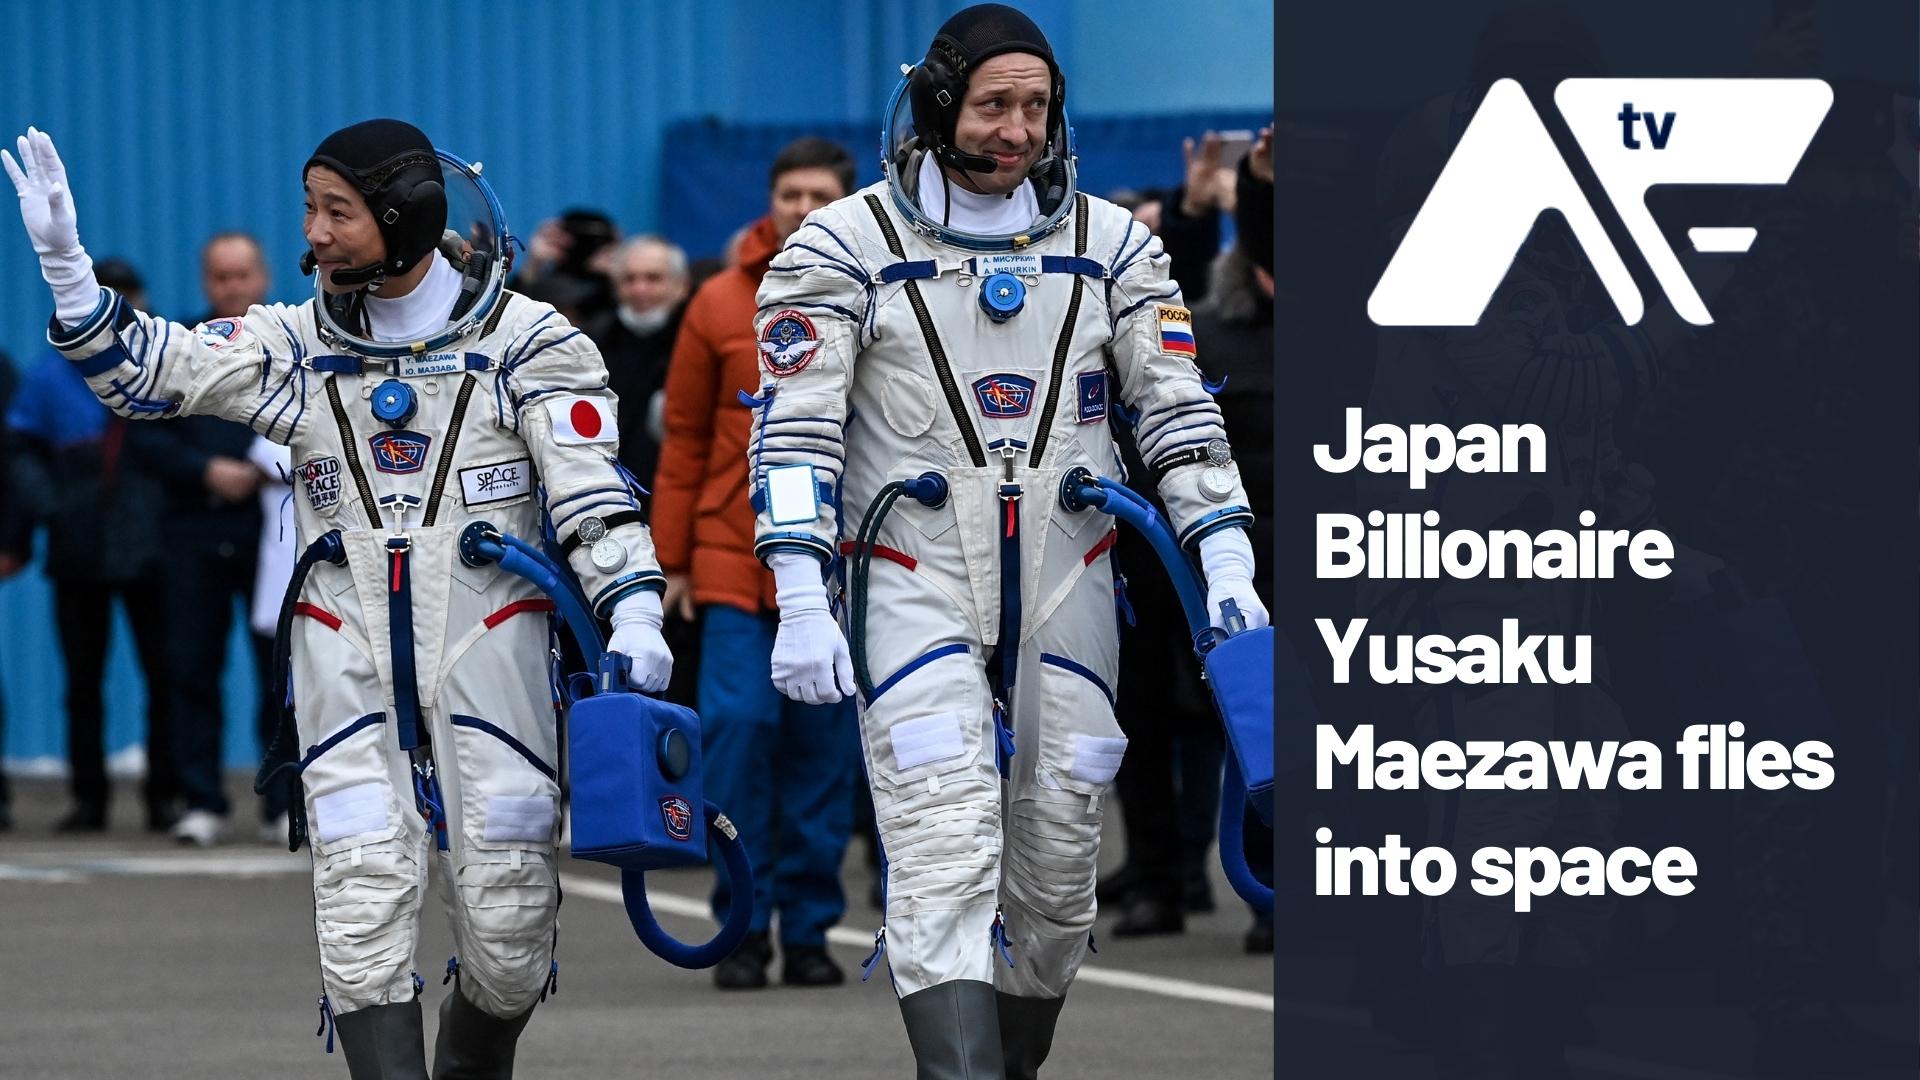 AF TV – Japan Billionaire Yusaku Maezawa flies into space